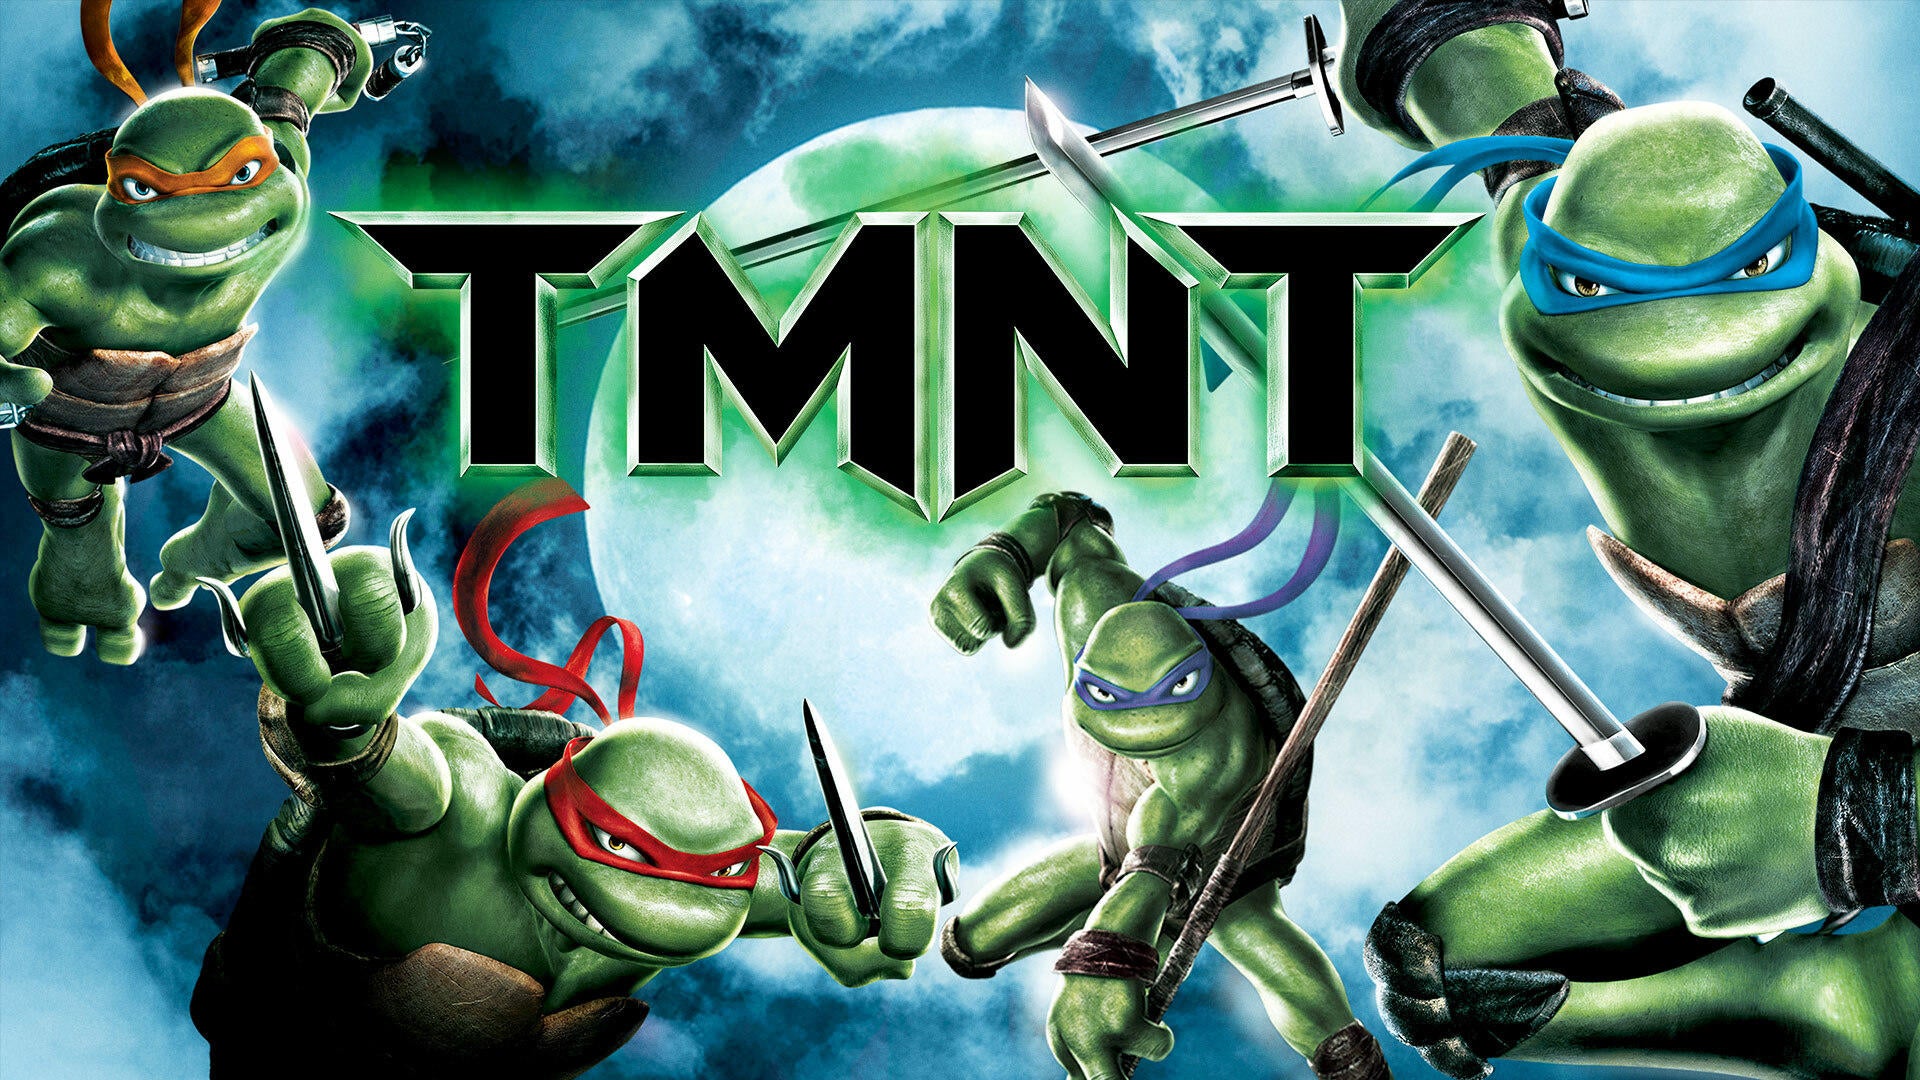 How to Watch All the Teenage Mutant Ninja Turtles Movies in Order